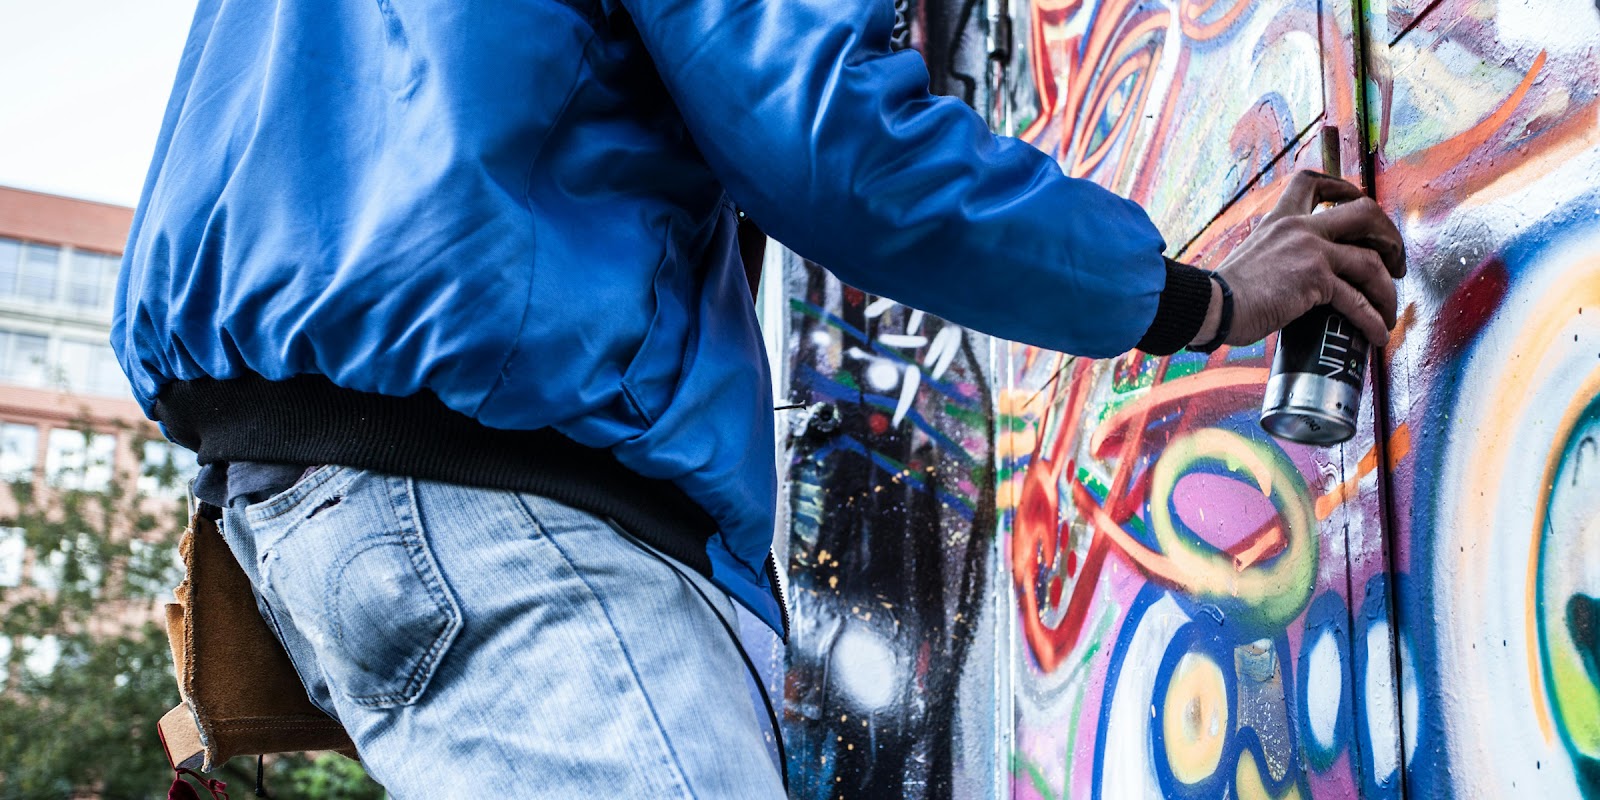 Person painting graffiti | Source: Pexels